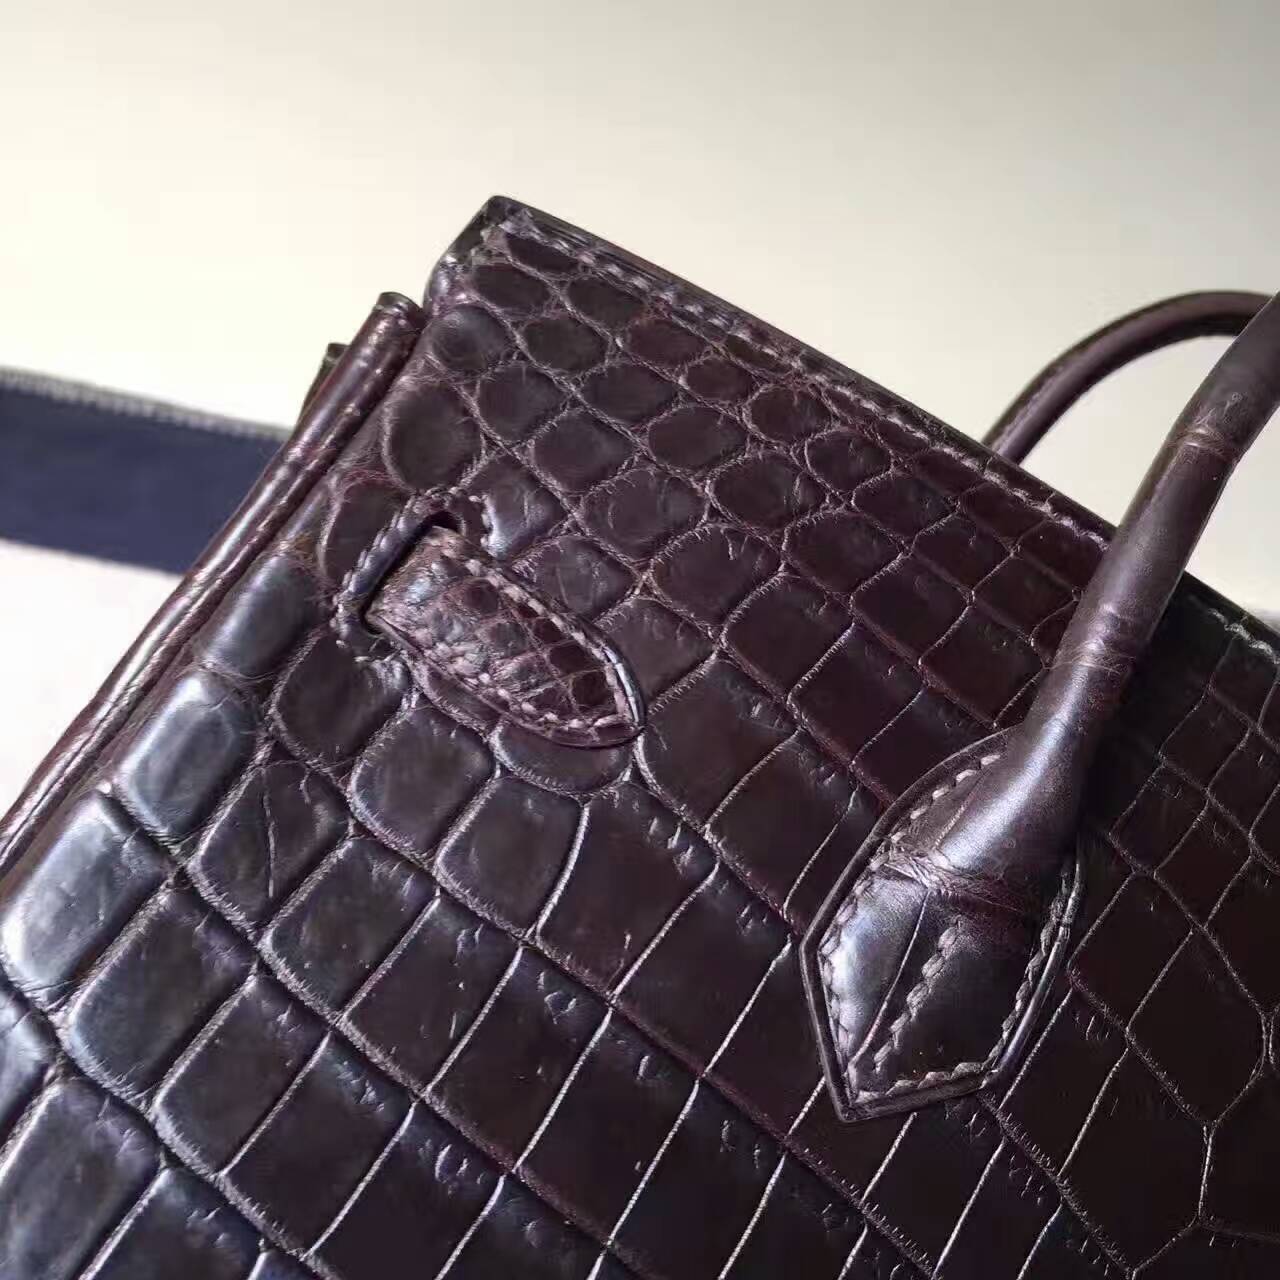 High Quality Hermes Chocolate Color Crocodile Matt Birkin Bag 25cm